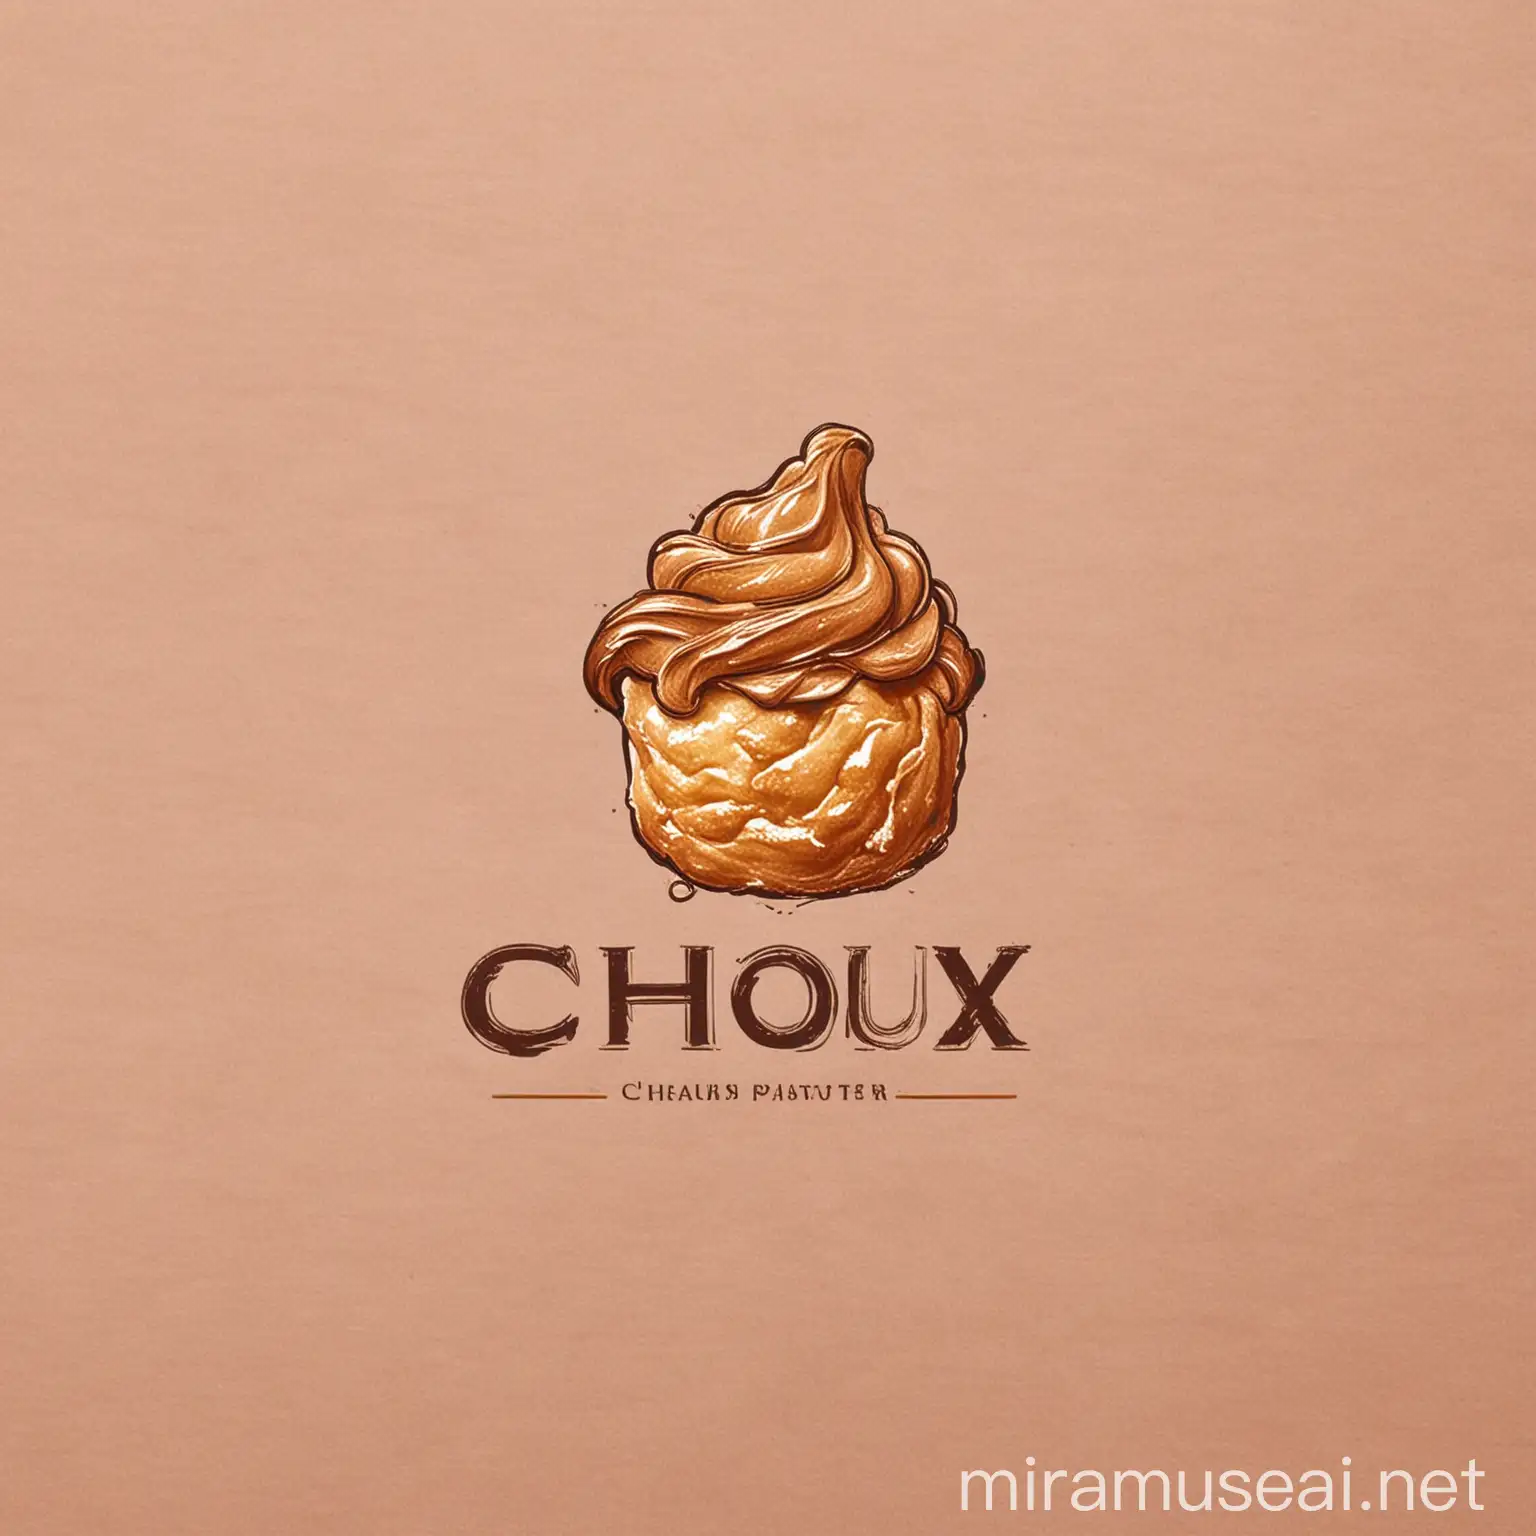 Elegant Choux Pastry Shop Logo Timeless Luxury Design